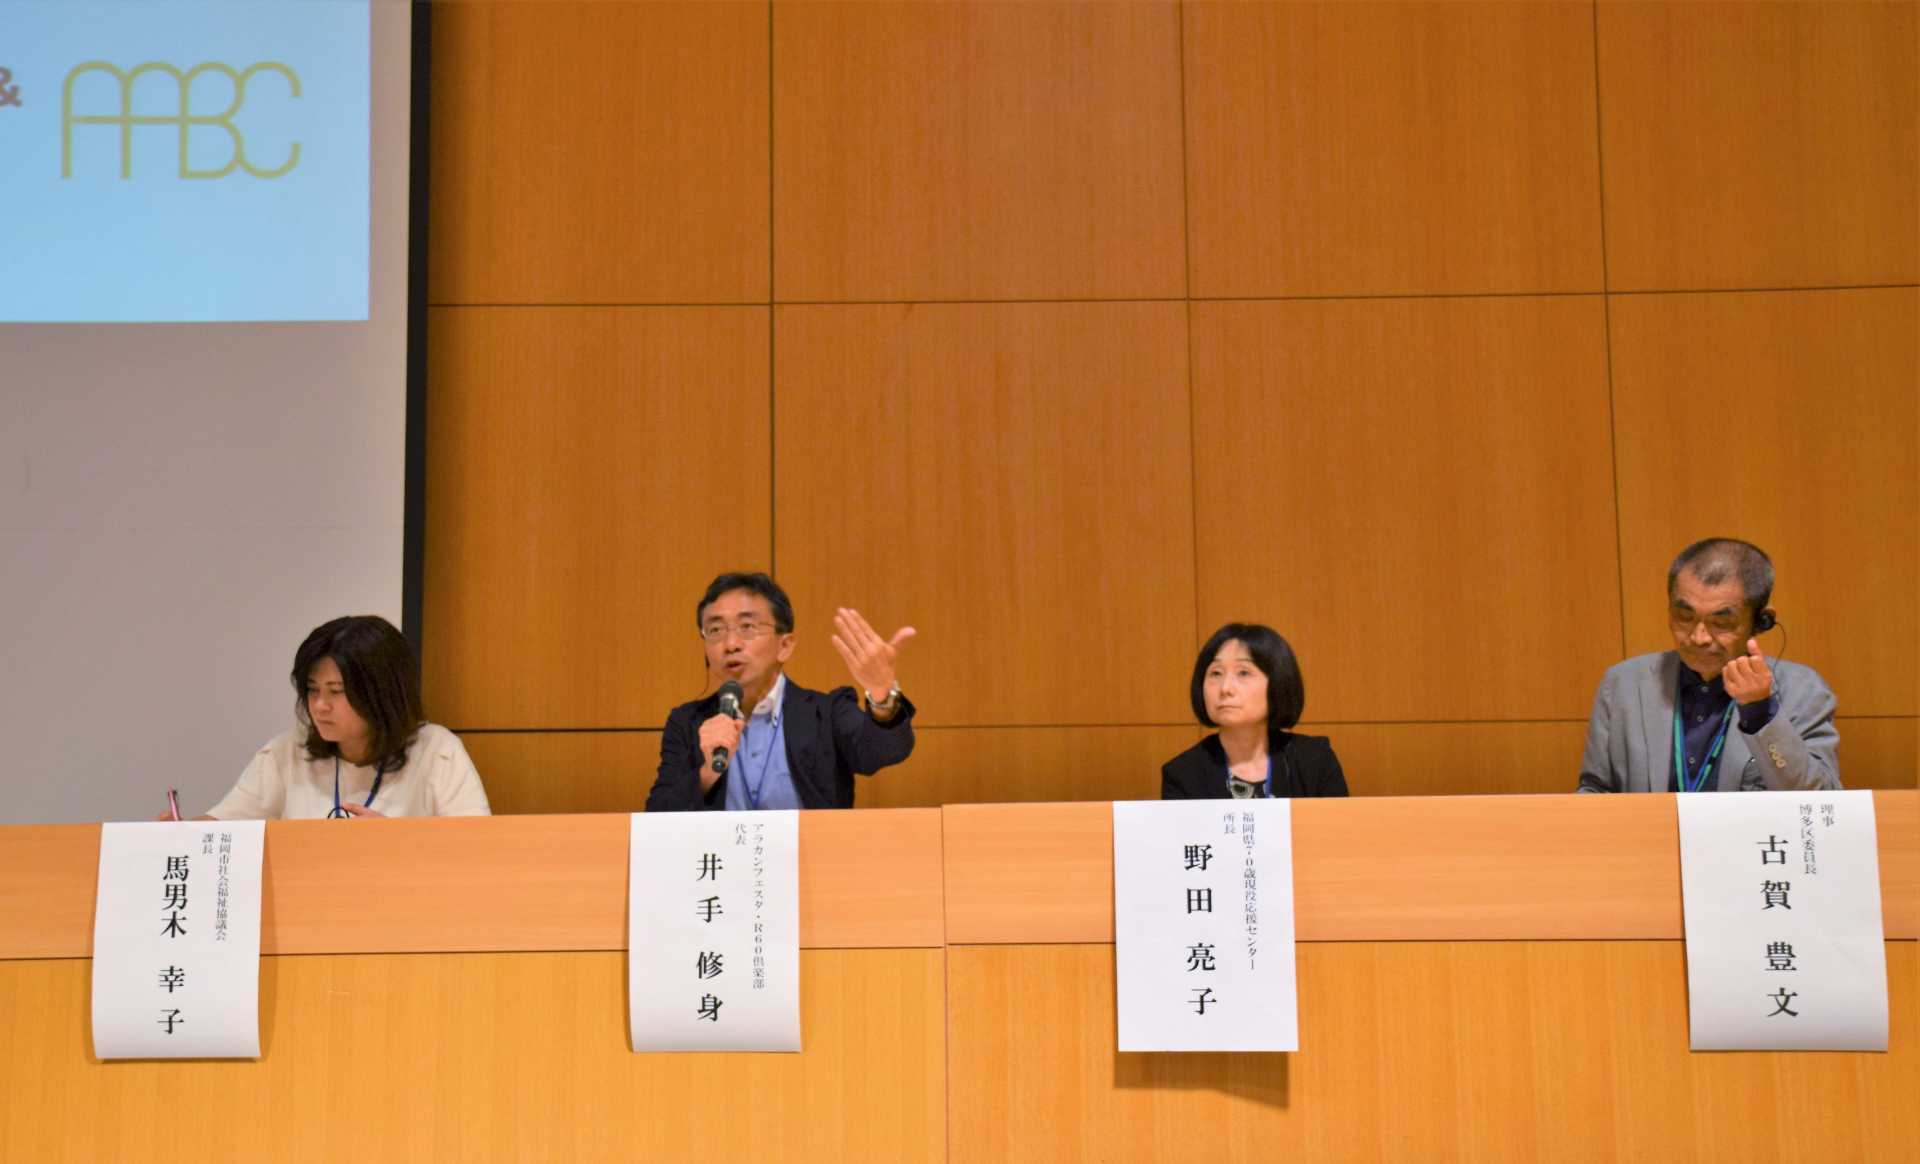 Representatives of Fukuoka Prefecture and Fukuoka City introduce various approaches at the symposium